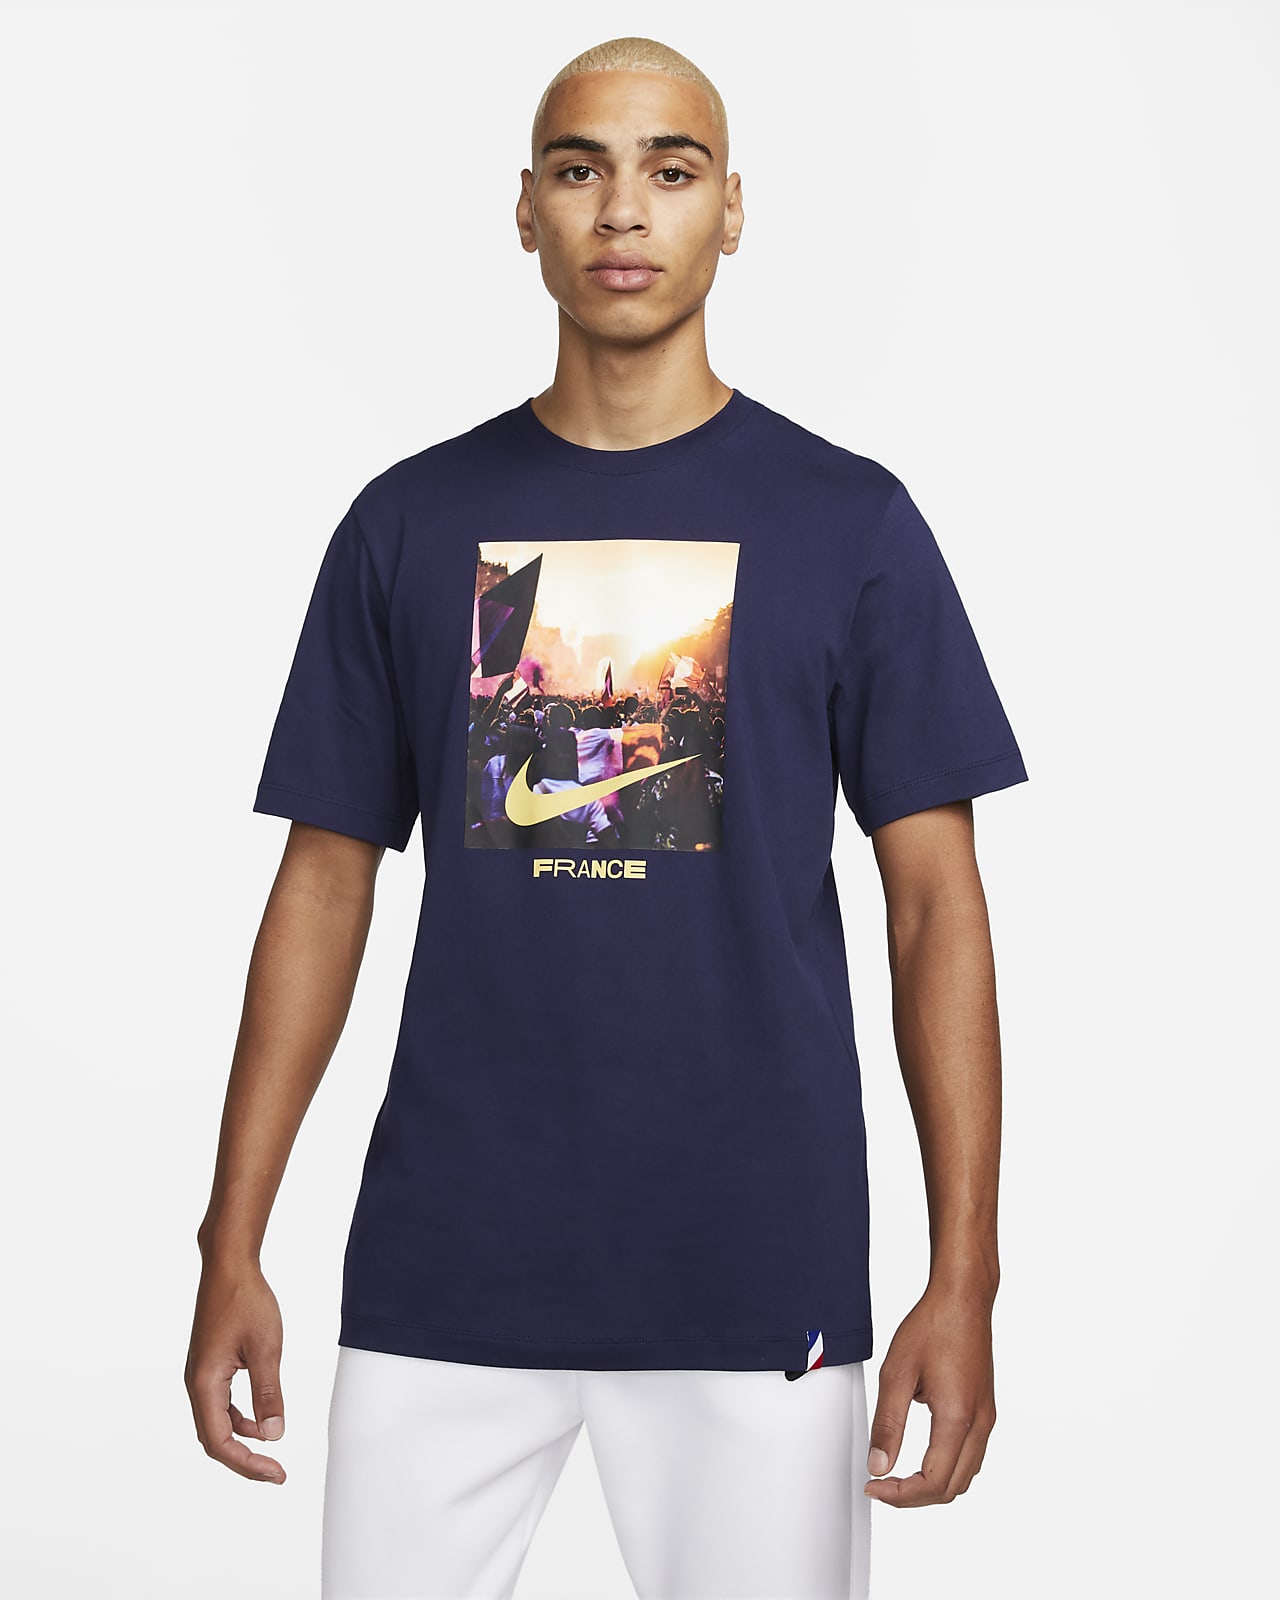 France Men's Graphic T-Shirt